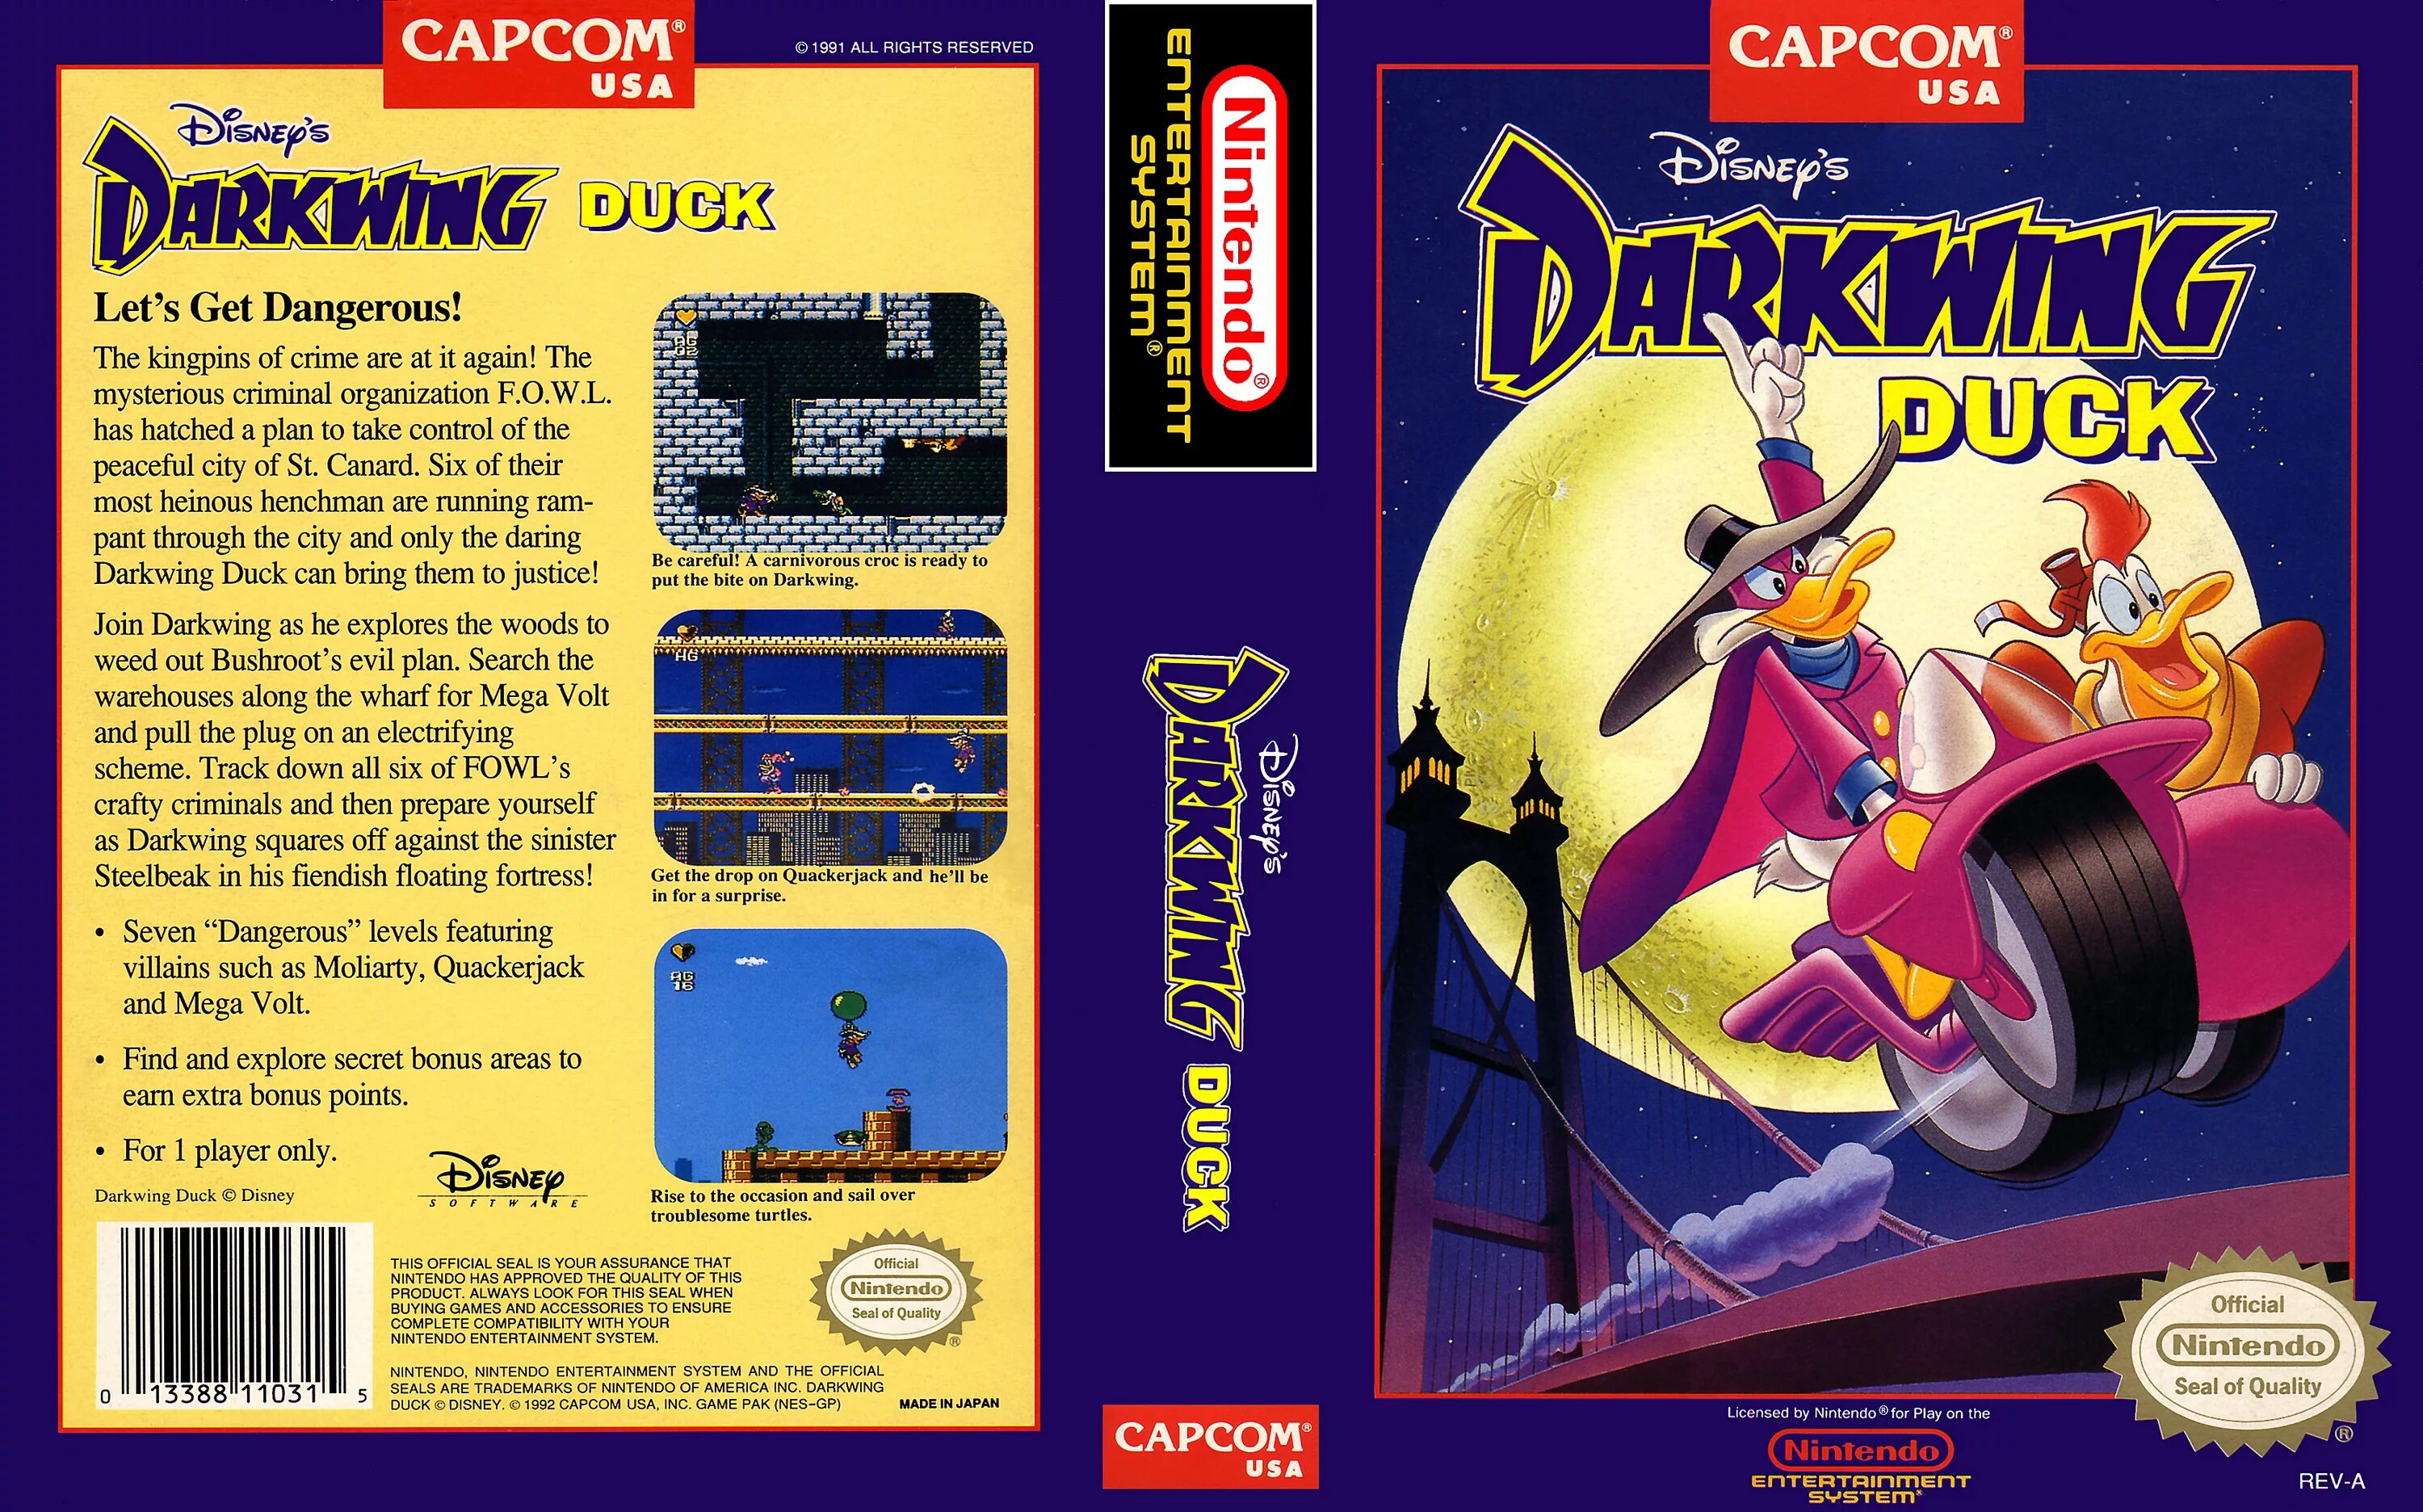 Darkwing duck capcom. Черный плащ NES Cover. Darkwing Duck NES обложка. Черный плащ Денди. Черный плащ NES русская версия.